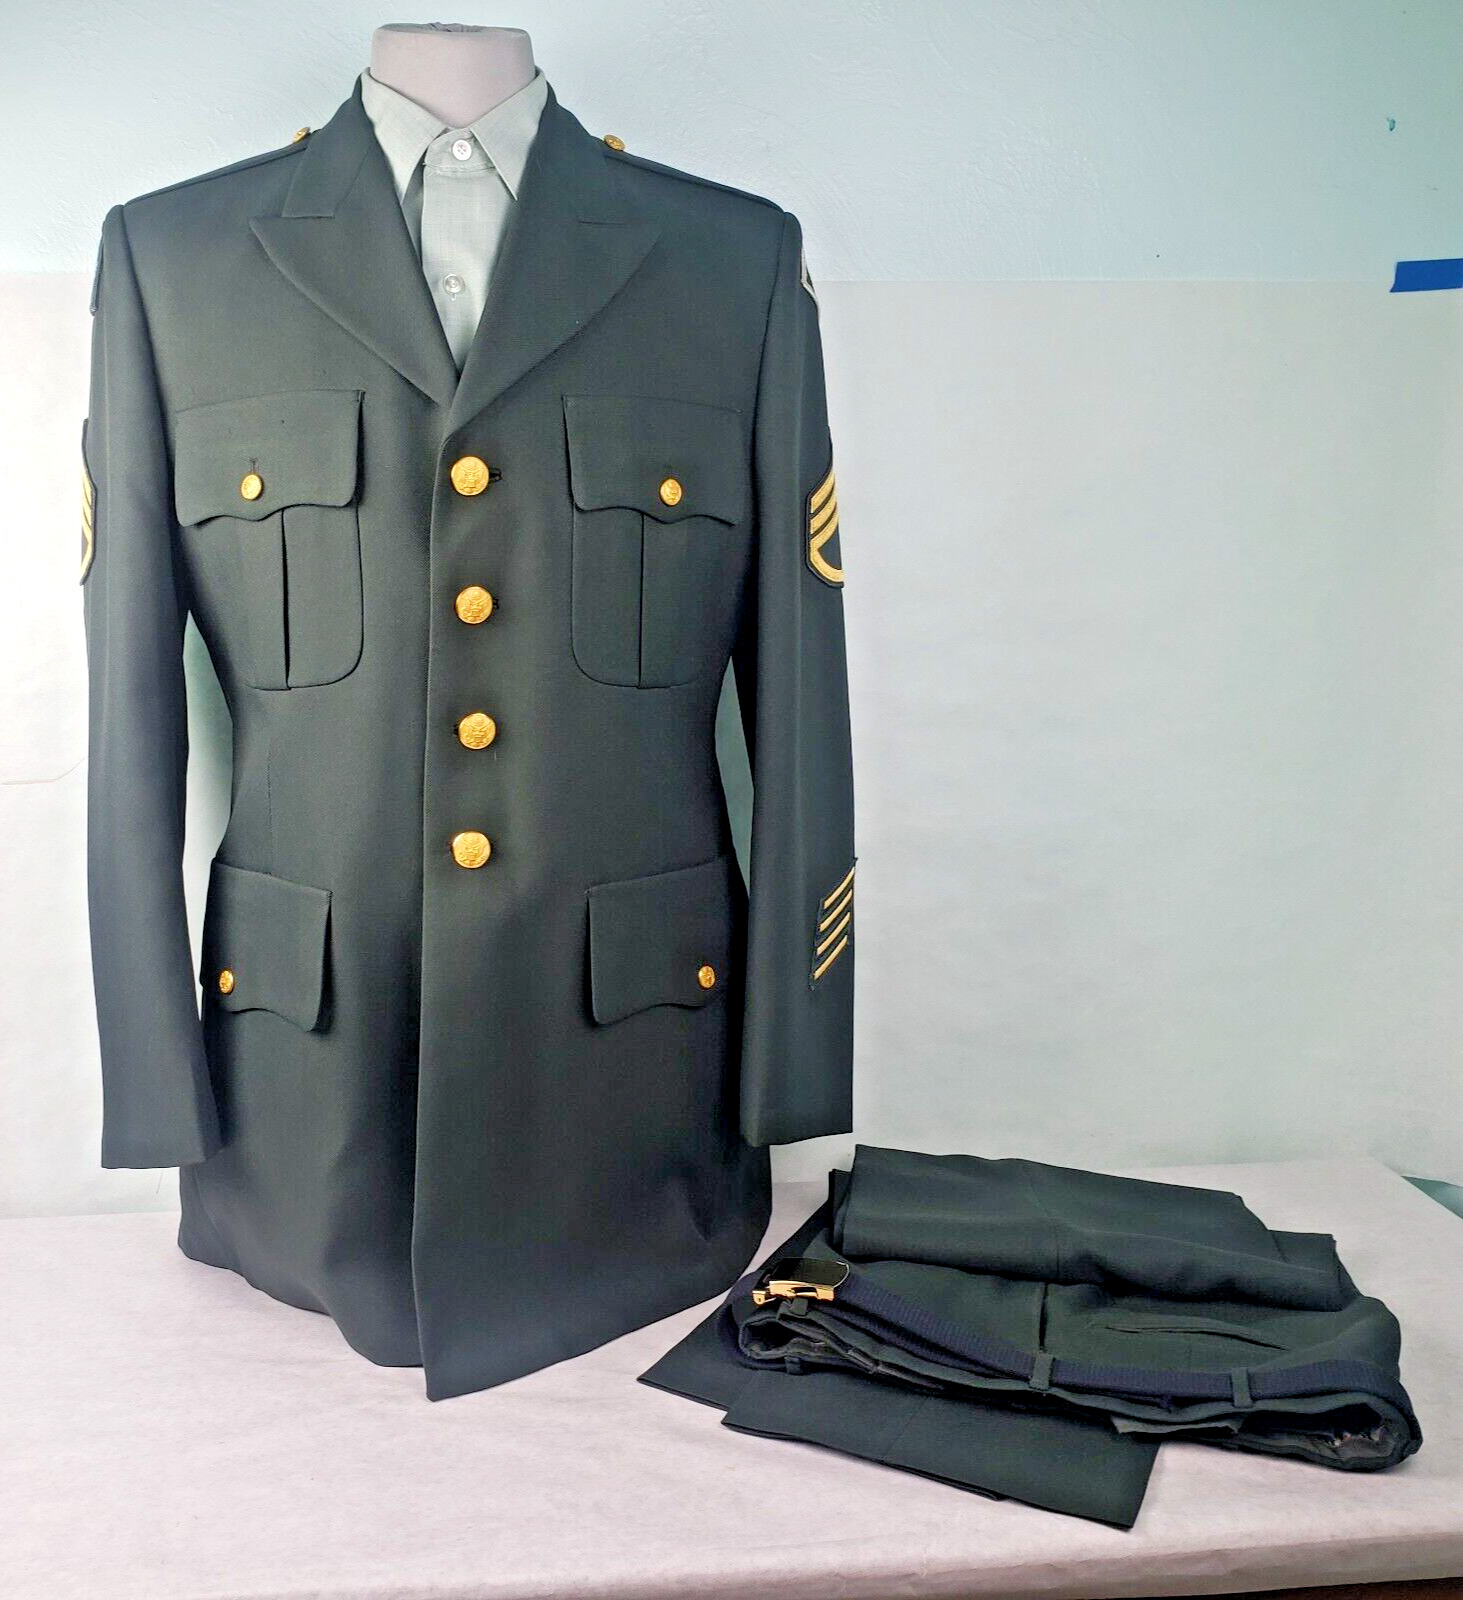 Vintage US Army Military Green Dress Uniform Jacket 42L Pants 34R Shirt 16x33